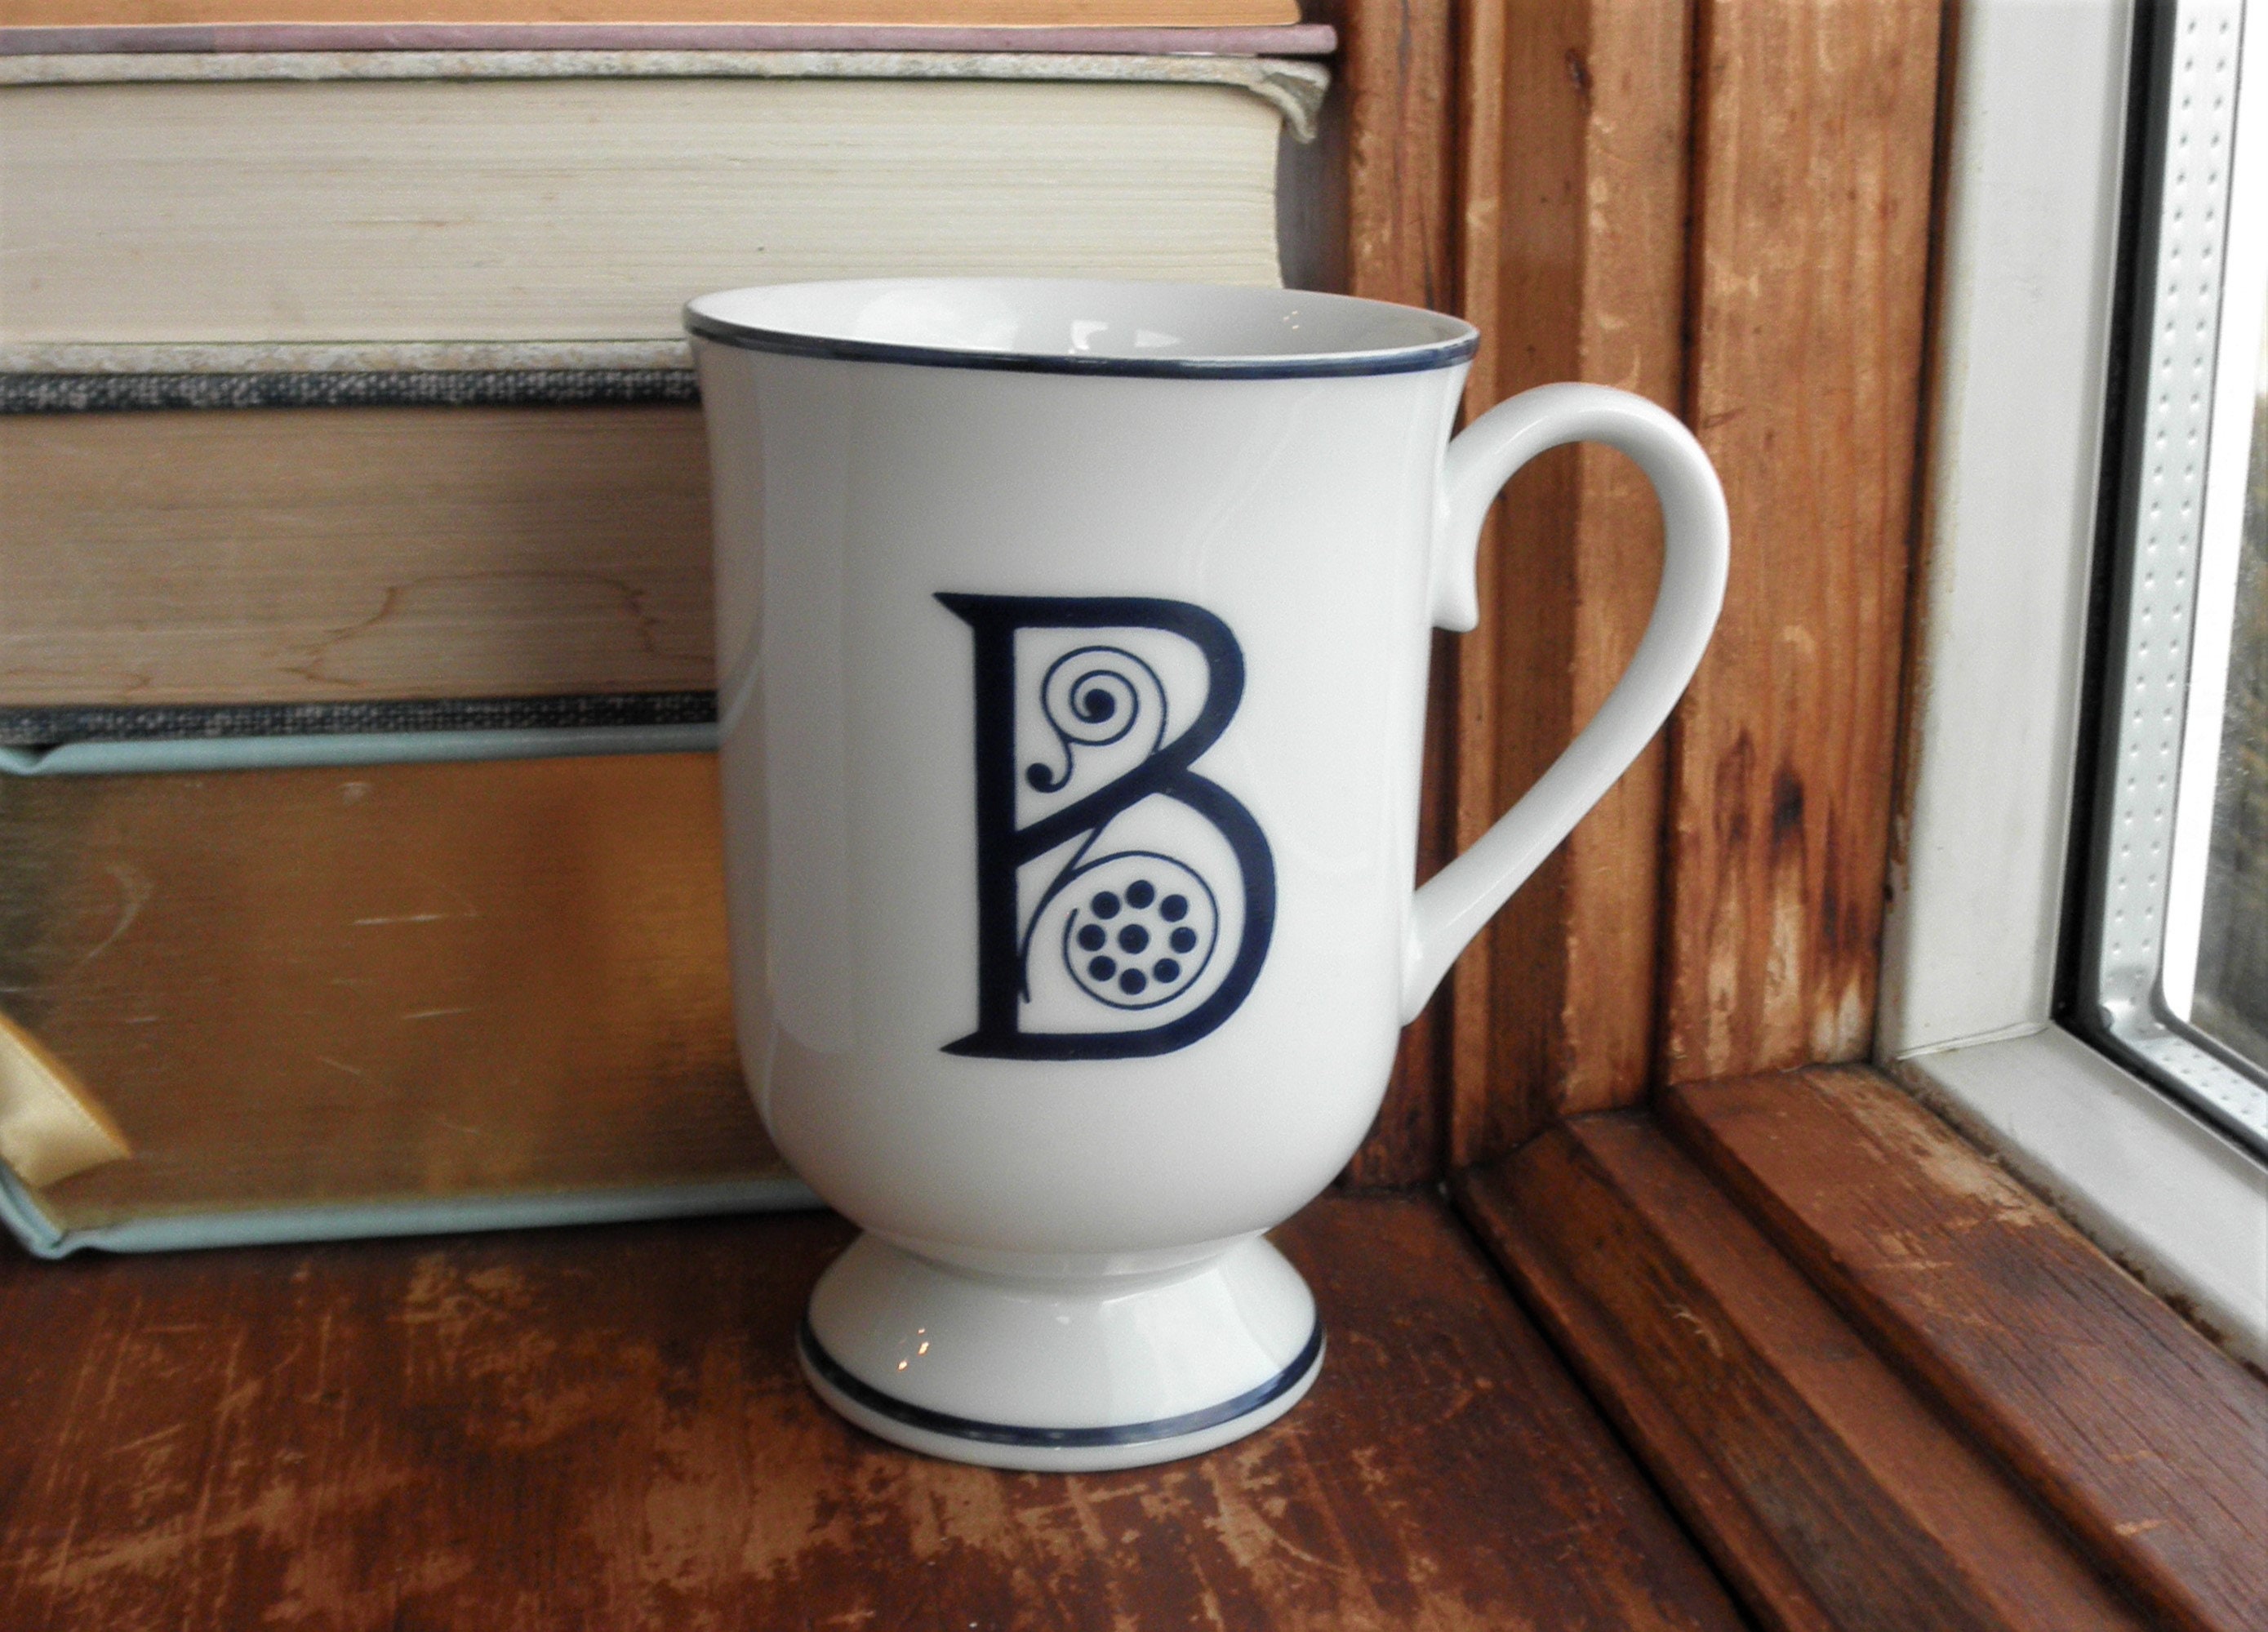 GODINGER 'B' MUG, I. Godinger Co. Letter Cup, Large 'B' Mug, Gift B Coffee  Cup, Gold Initial 'B' Mug, Teacup, White Ceramic Gold Trim -  Finland